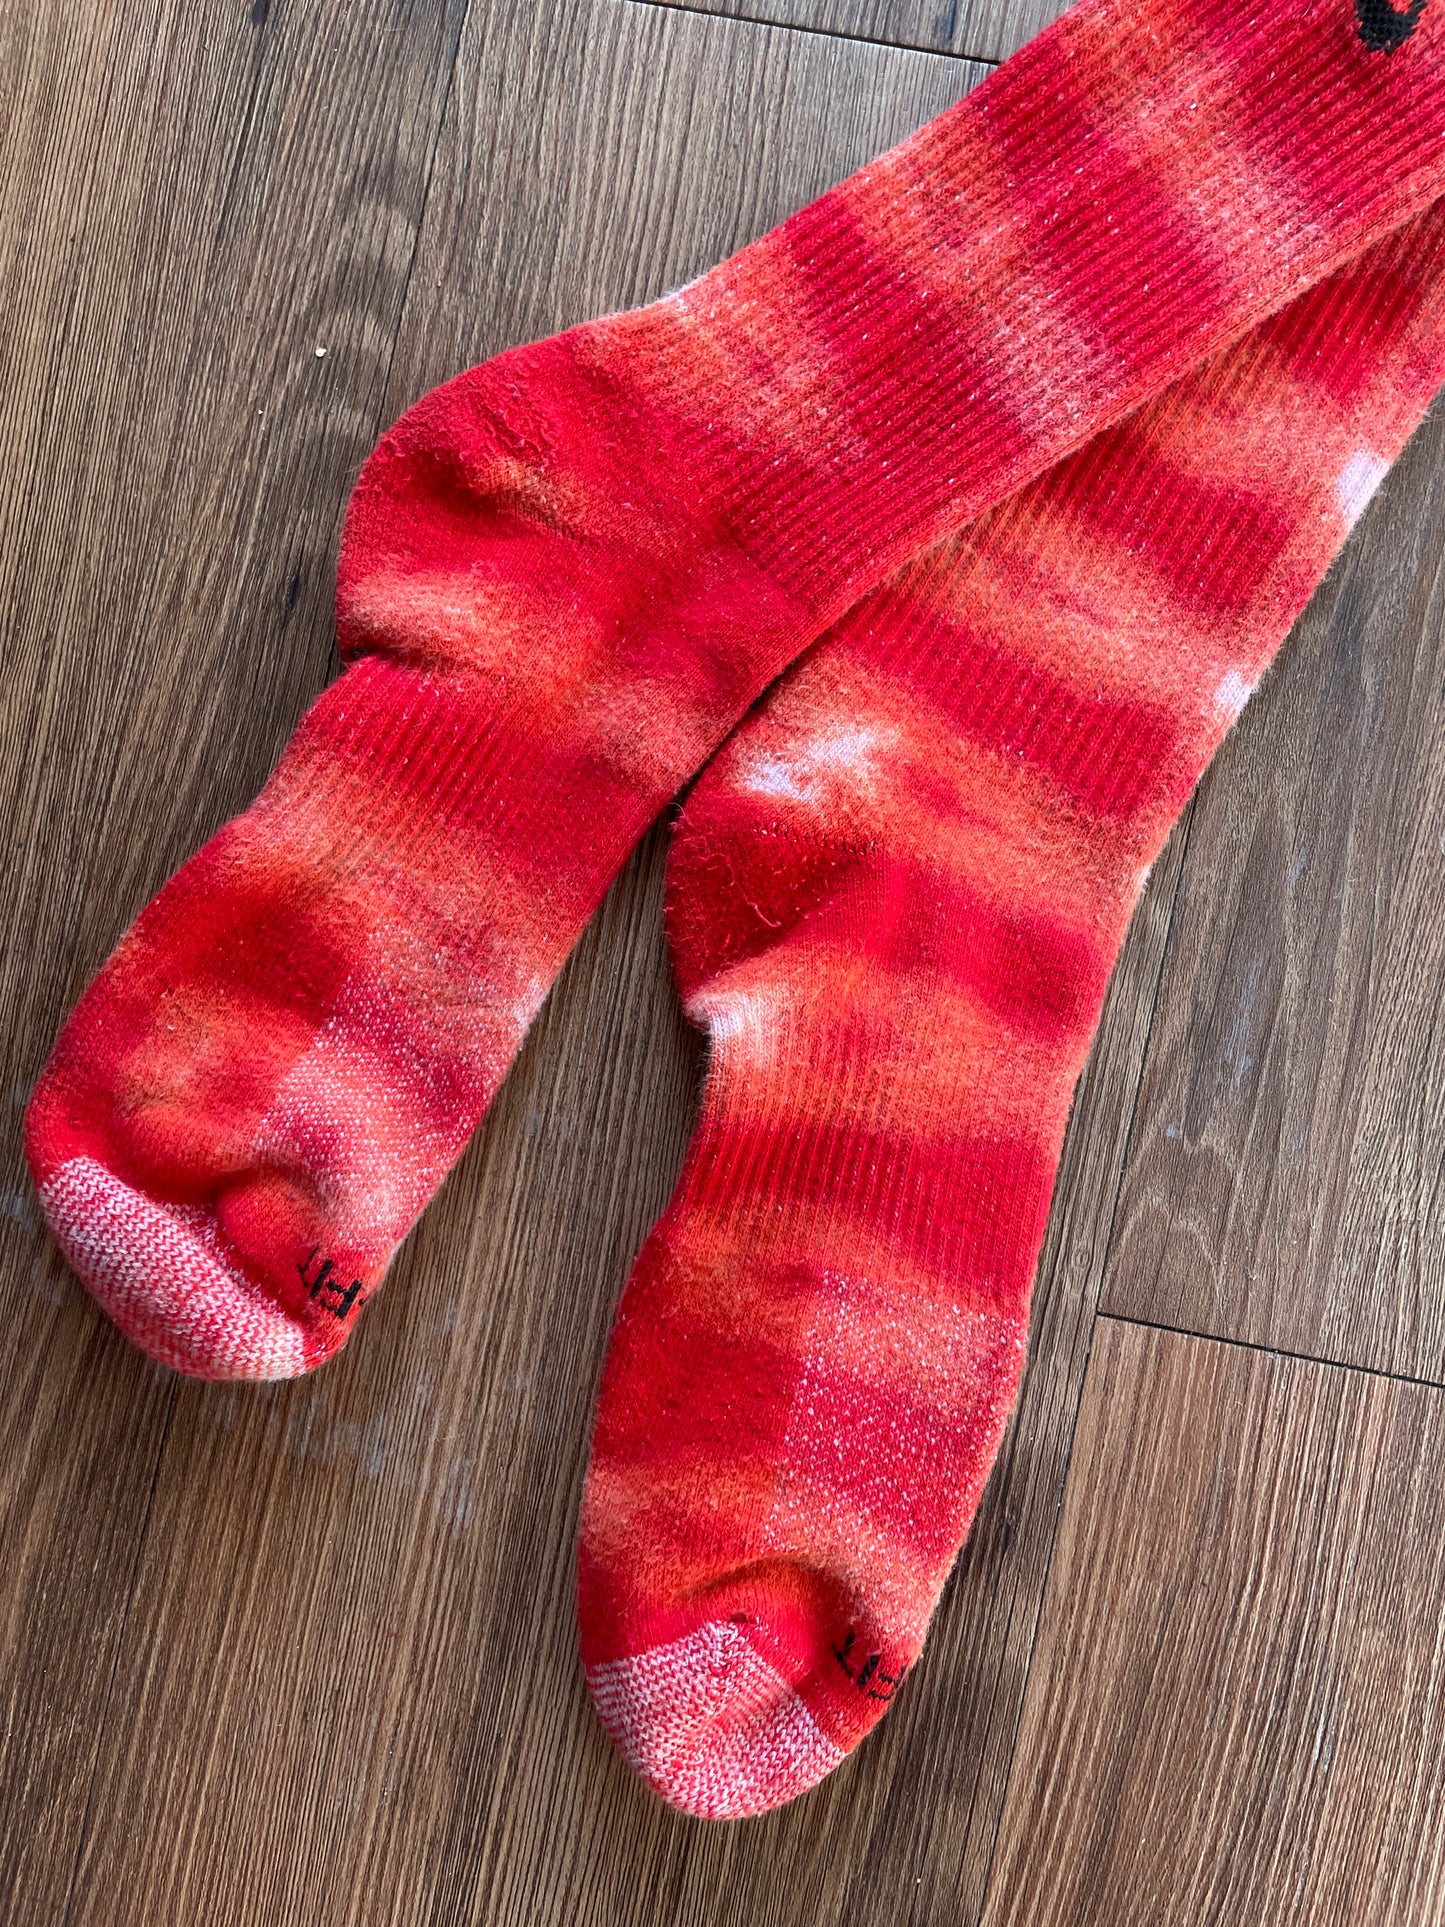 Red and White Tie Dye Nike Dri-FIT Everyday Plus Training Socks - Size Medium (Men's 6-8/Women's 7-10)